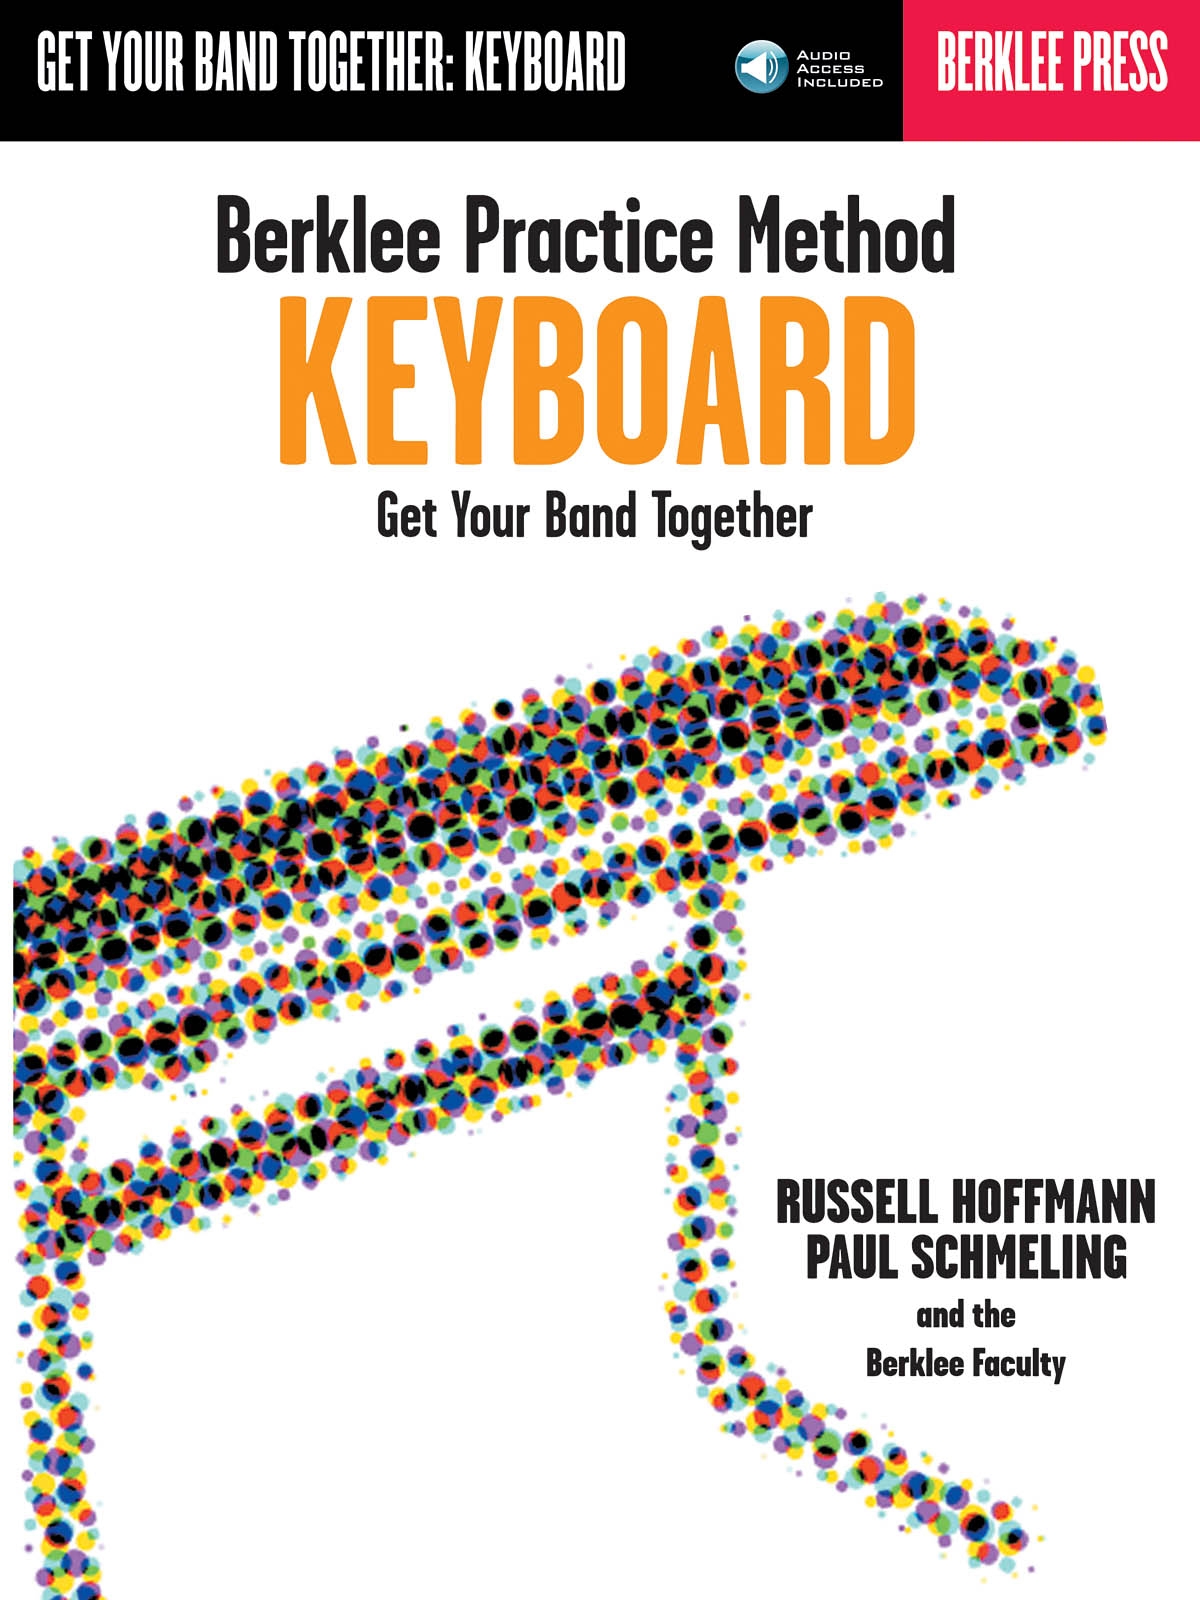 Berklee Practice Method: Keyboard - Get Your Band Together - pro keyboard